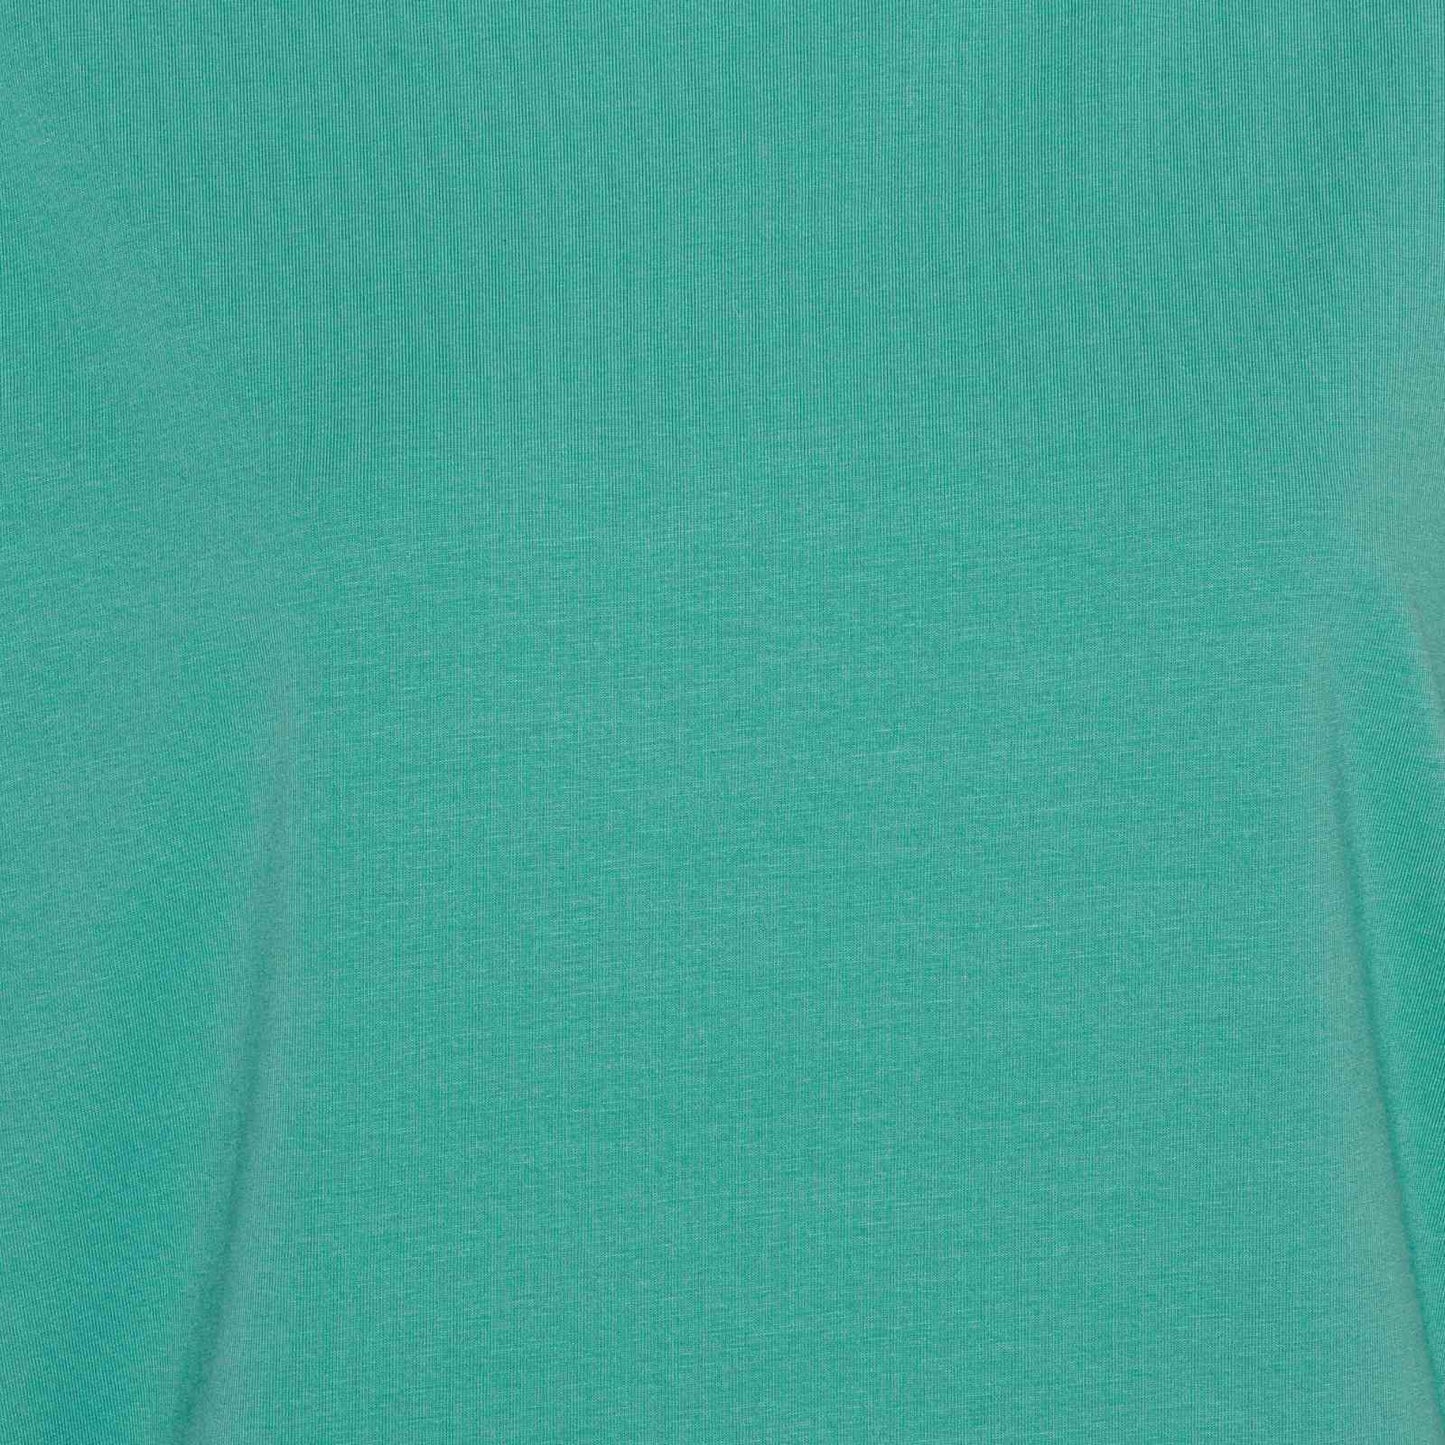 emerald græn t-shirt stof Uva